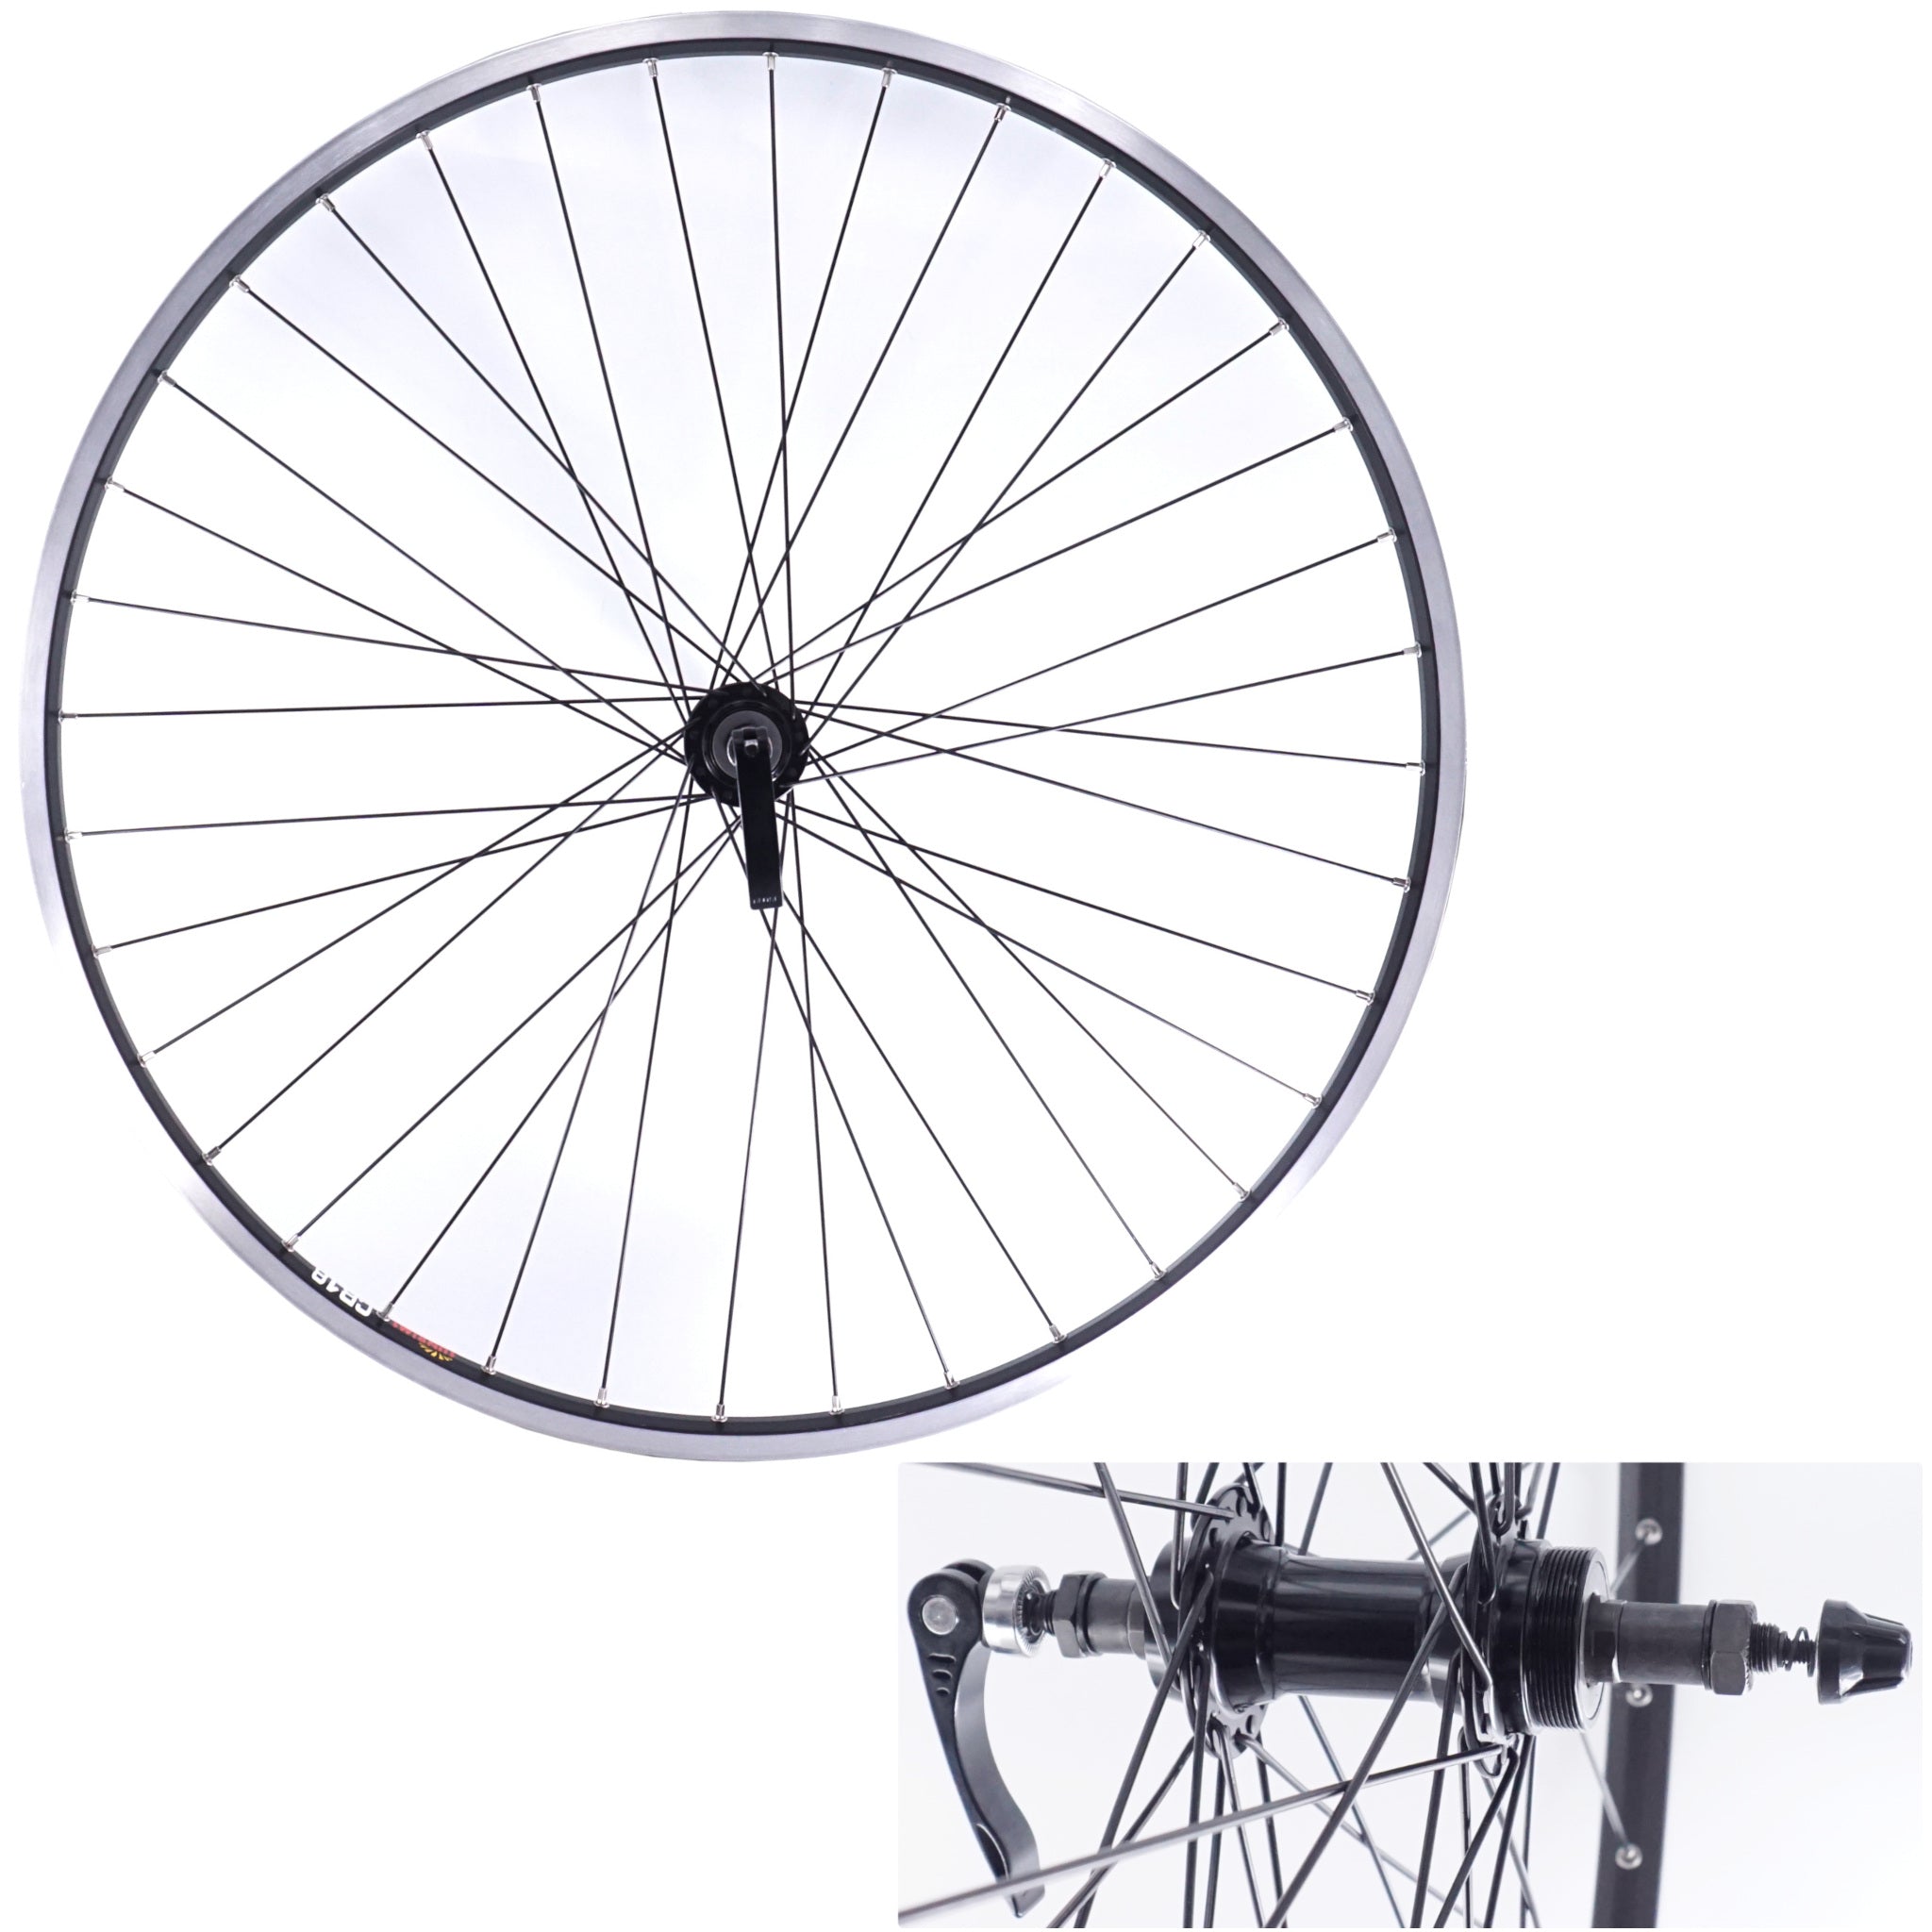 Sun Ringle CR-18 700c Rear Hybrid Bike Wheel - Freewheel Hub - The Bikesmiths